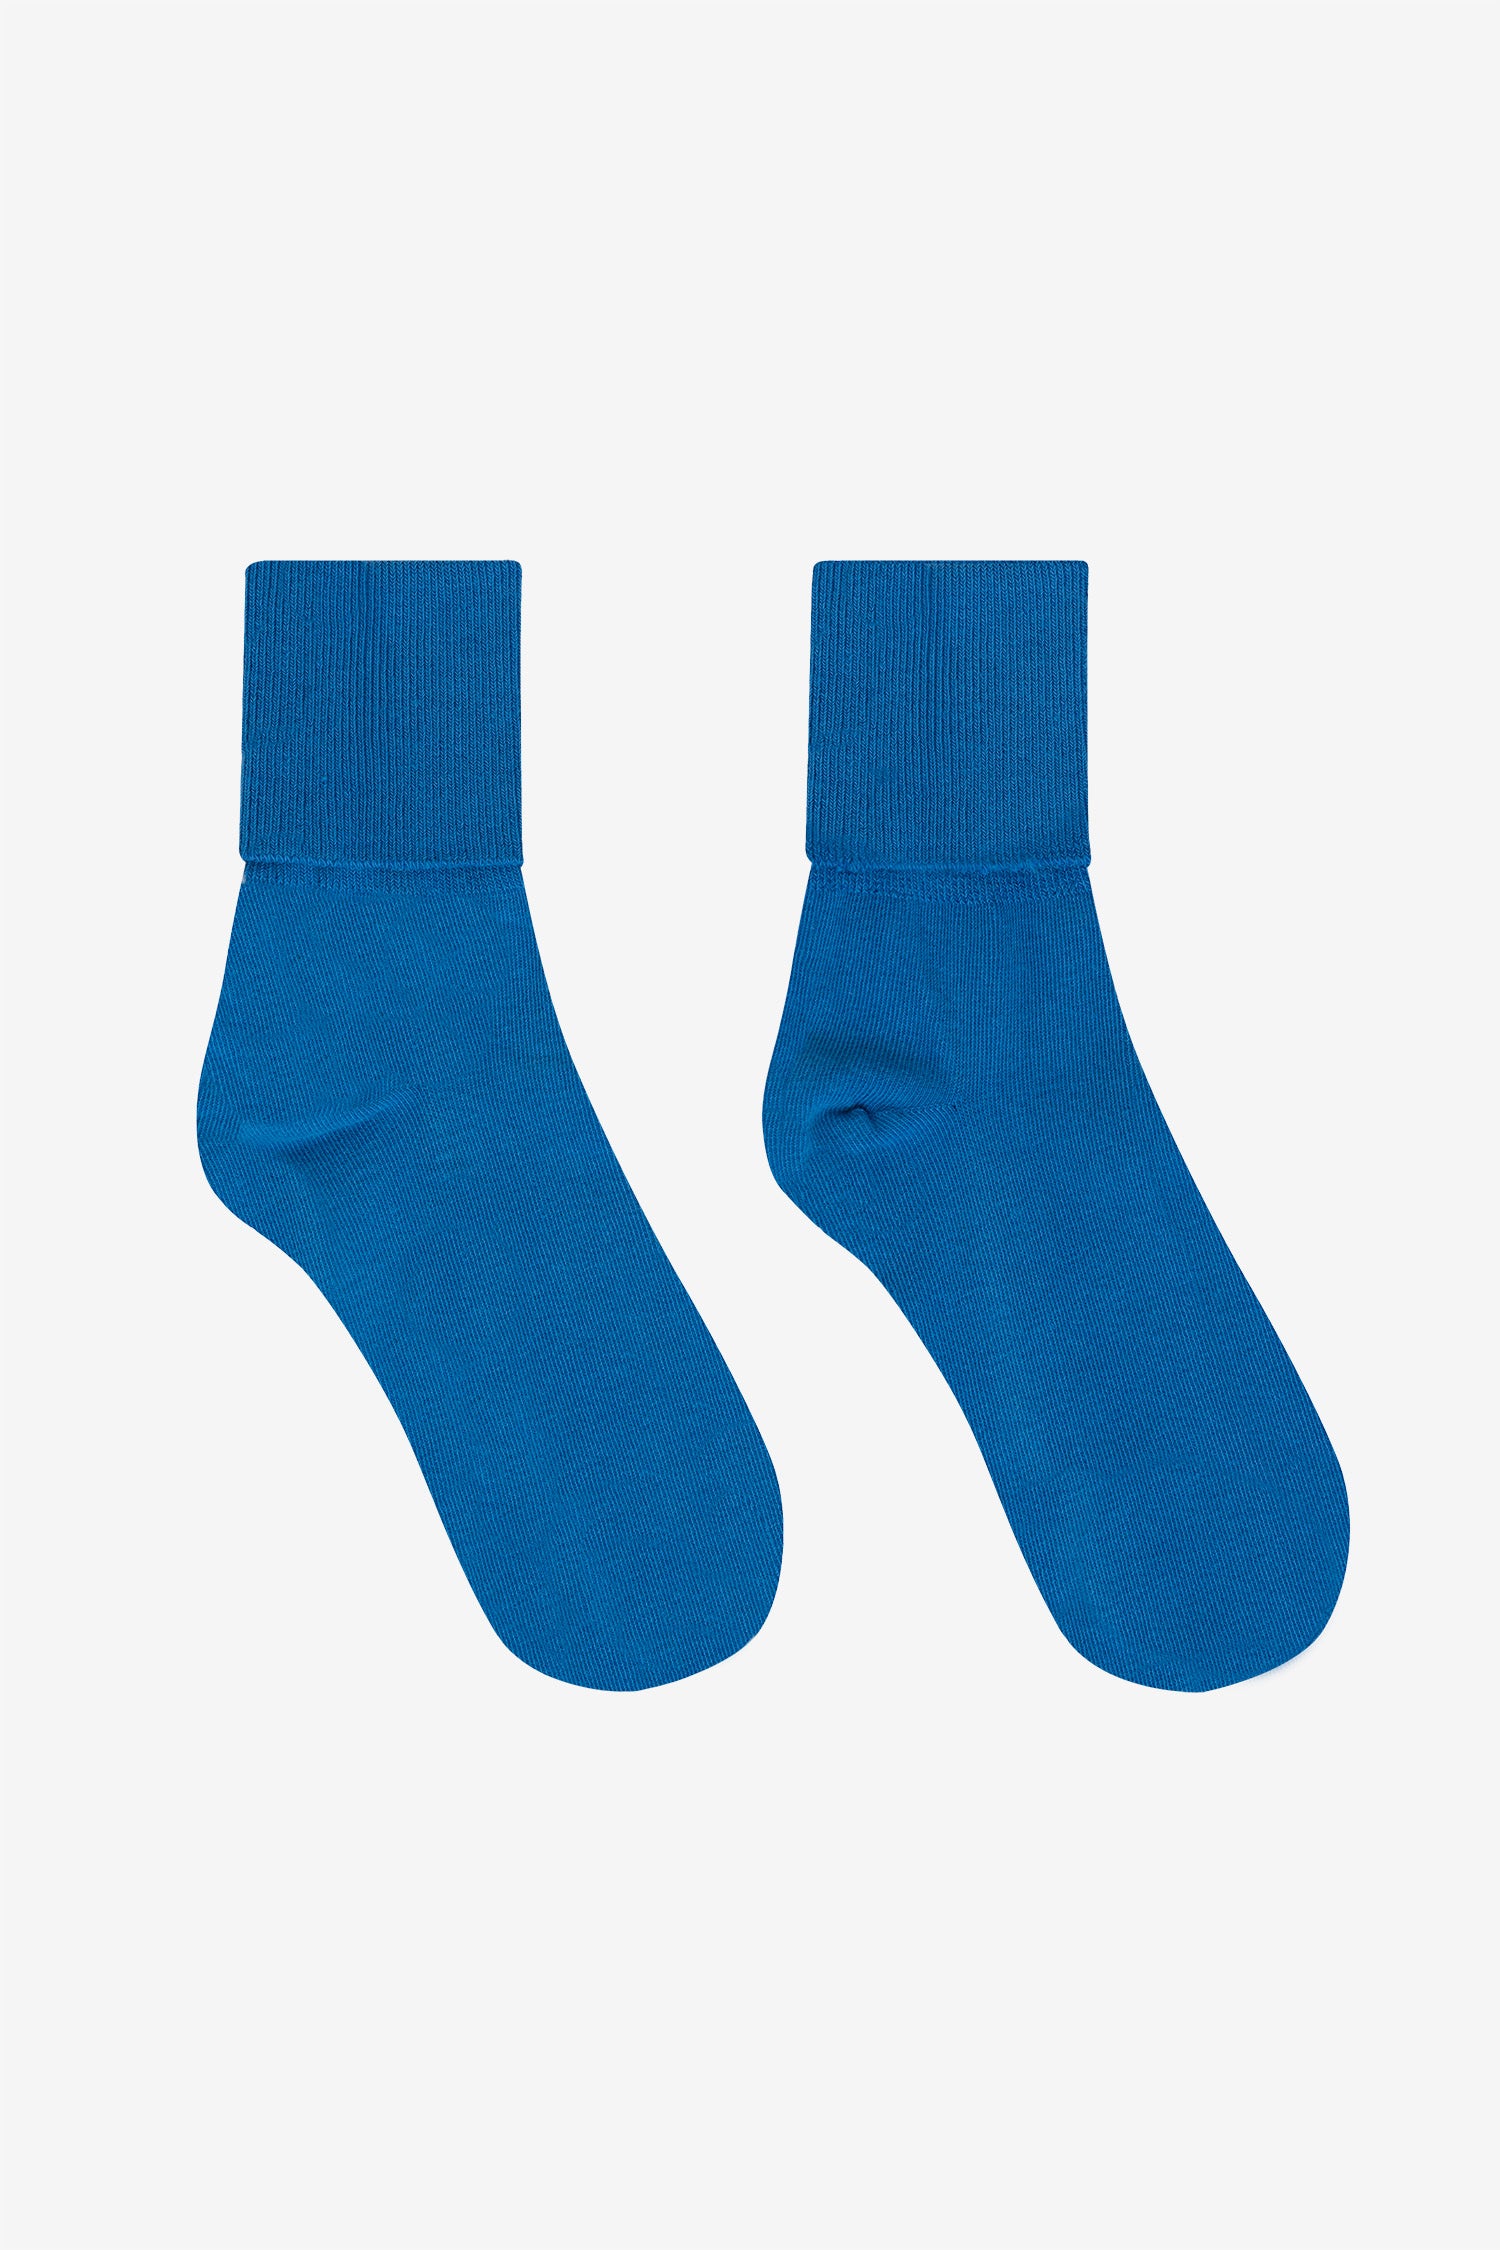 Socks  Los Angeles Trading Company Womens Flat Socks - More